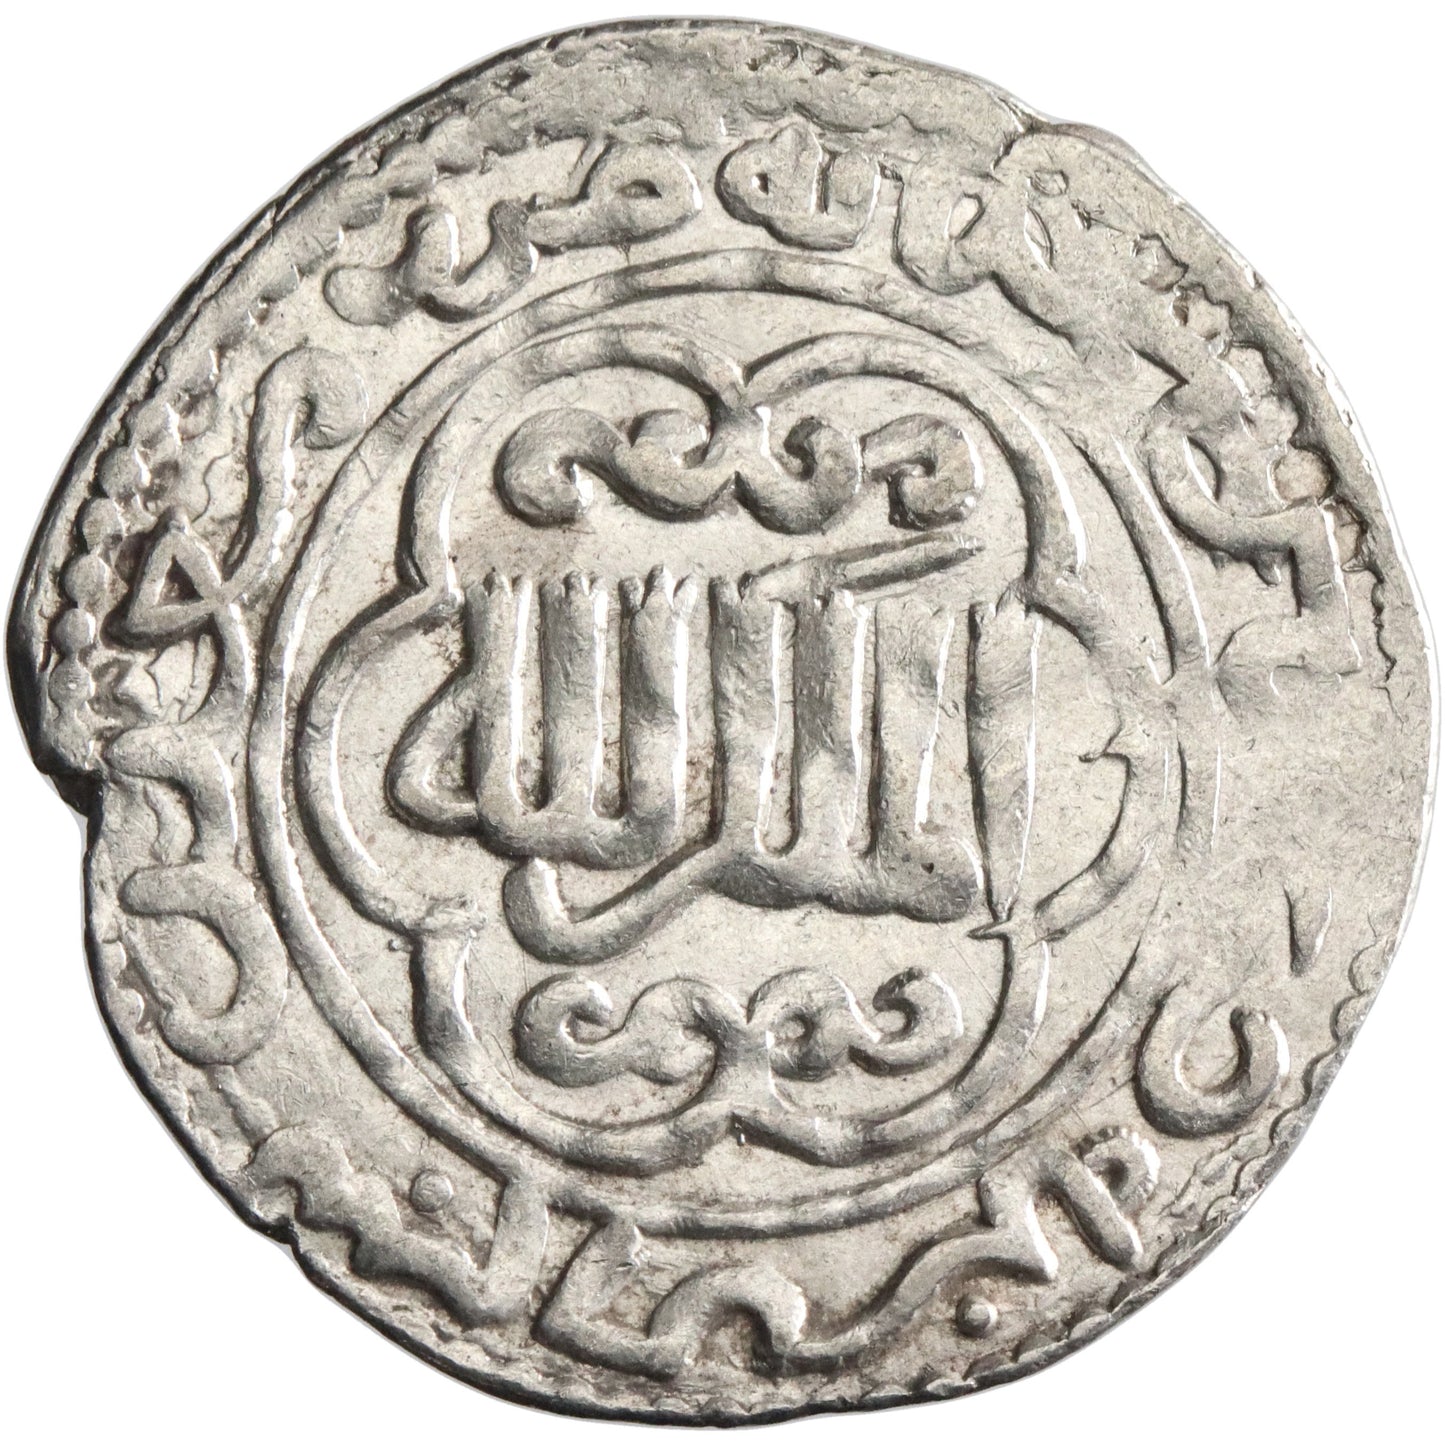 Seljuq of Rum, Kaykhusraw III, silver dirham, Ma'dan Shahr mint, AH 665